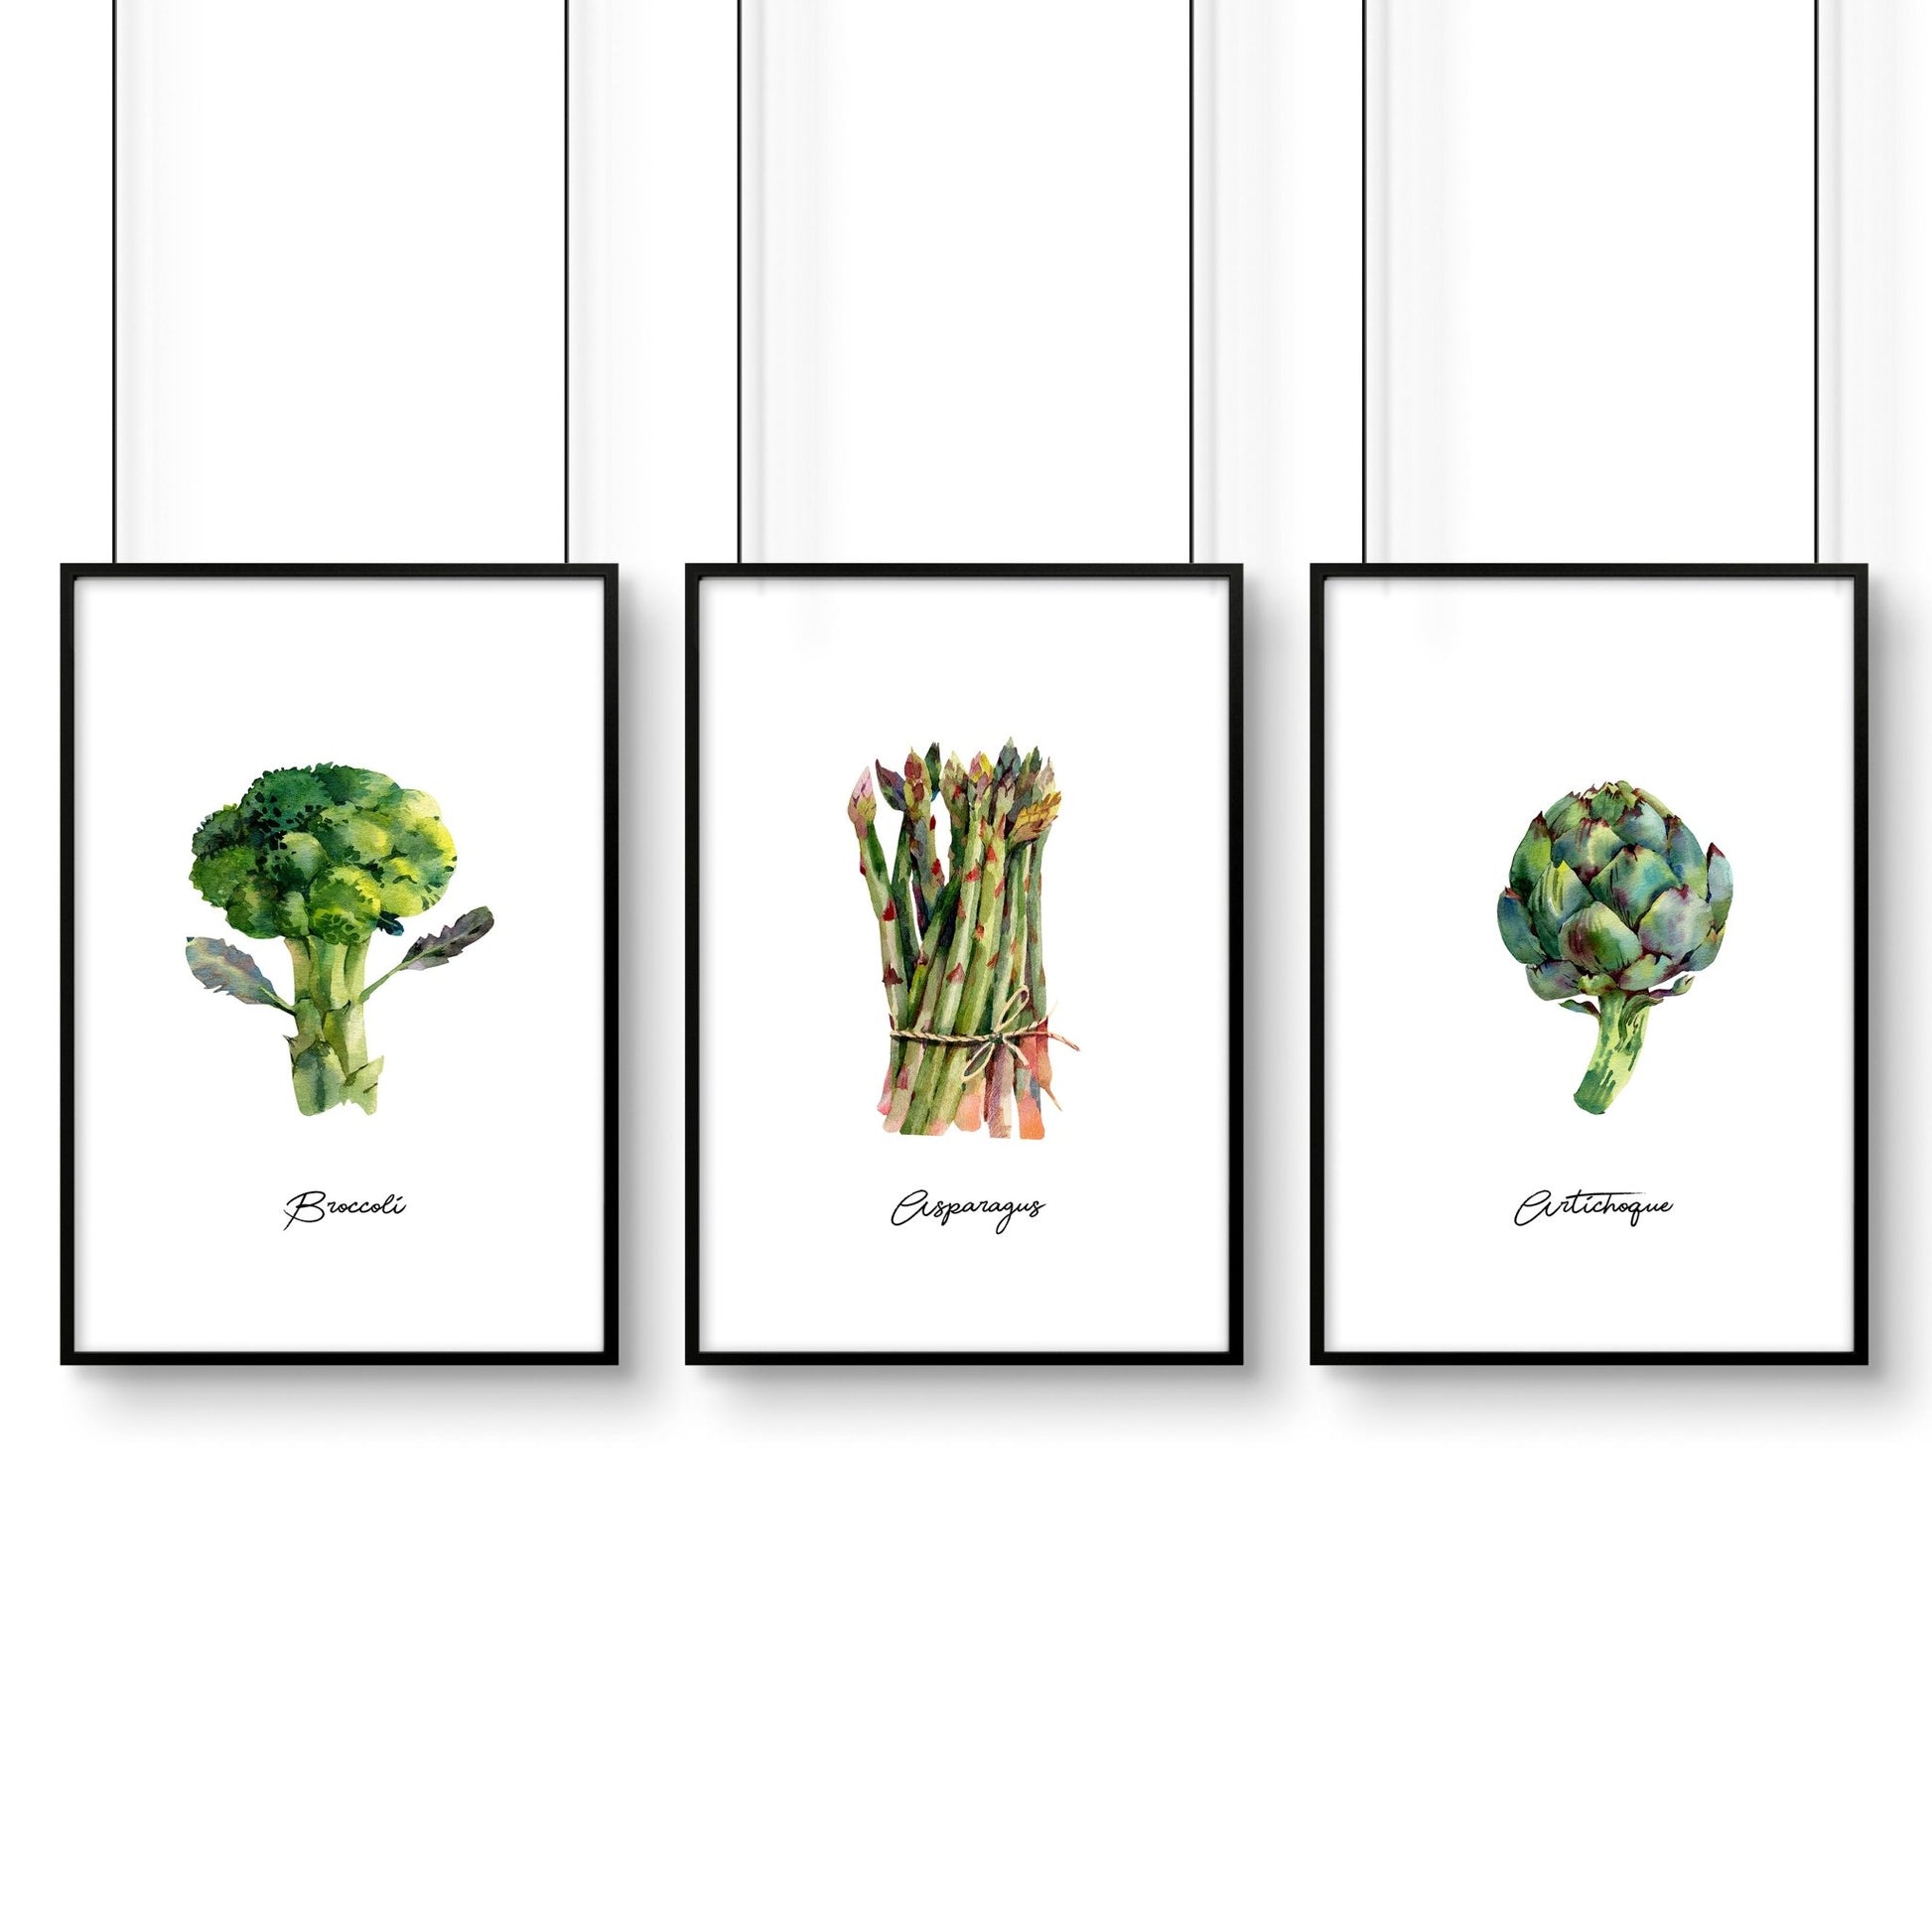 Vegetables Wall Art Prints for Kitchen | set of 3 wall art prints - About Wall Art